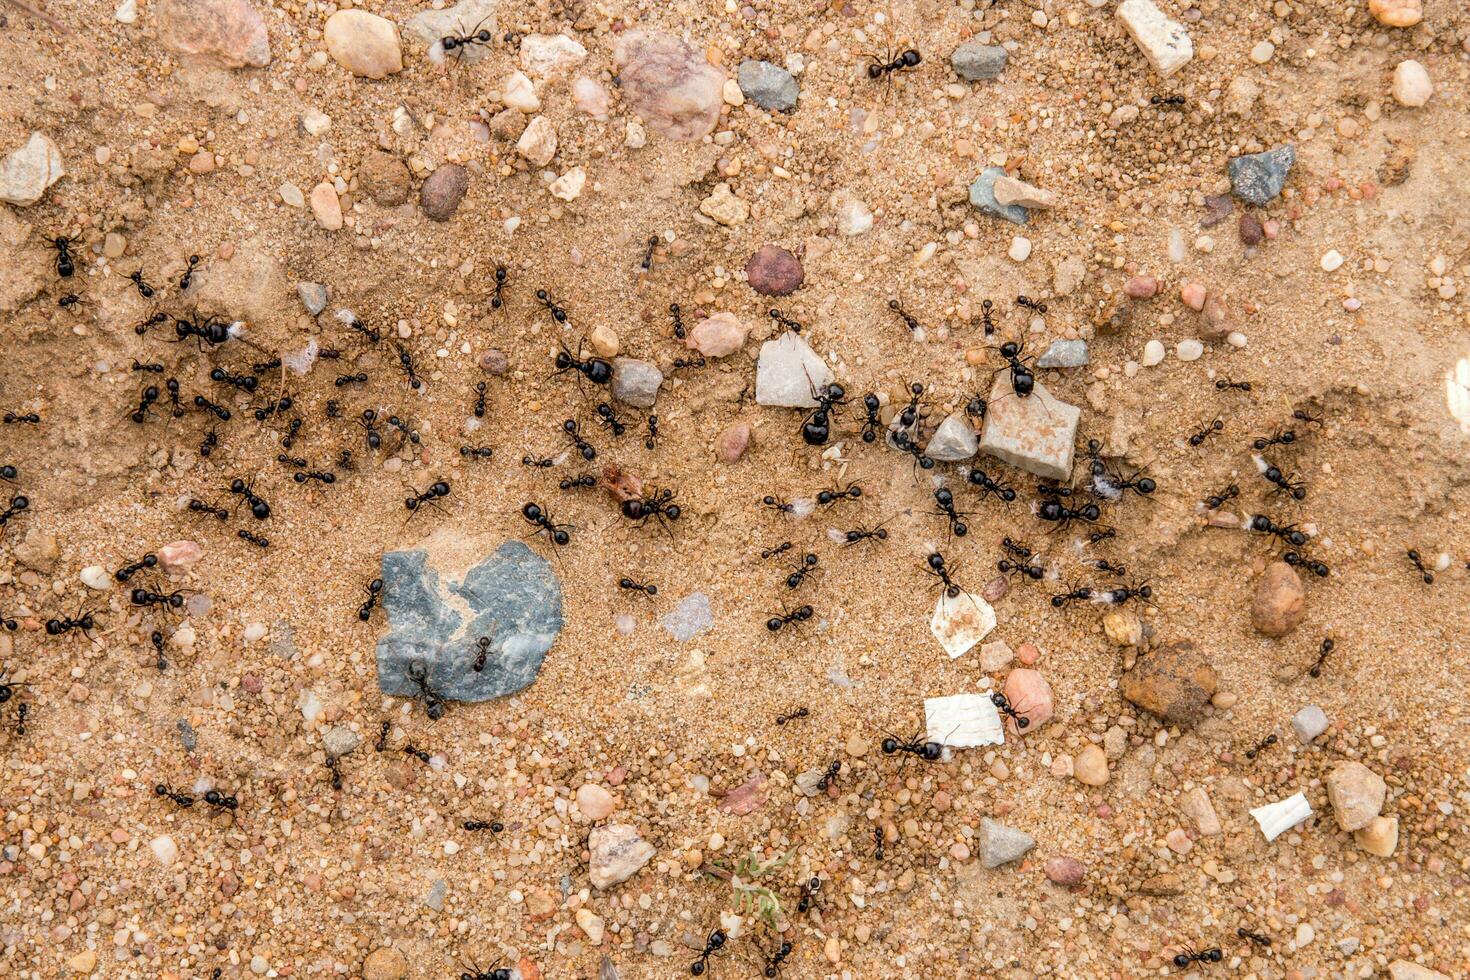 Black ants on the ground photo